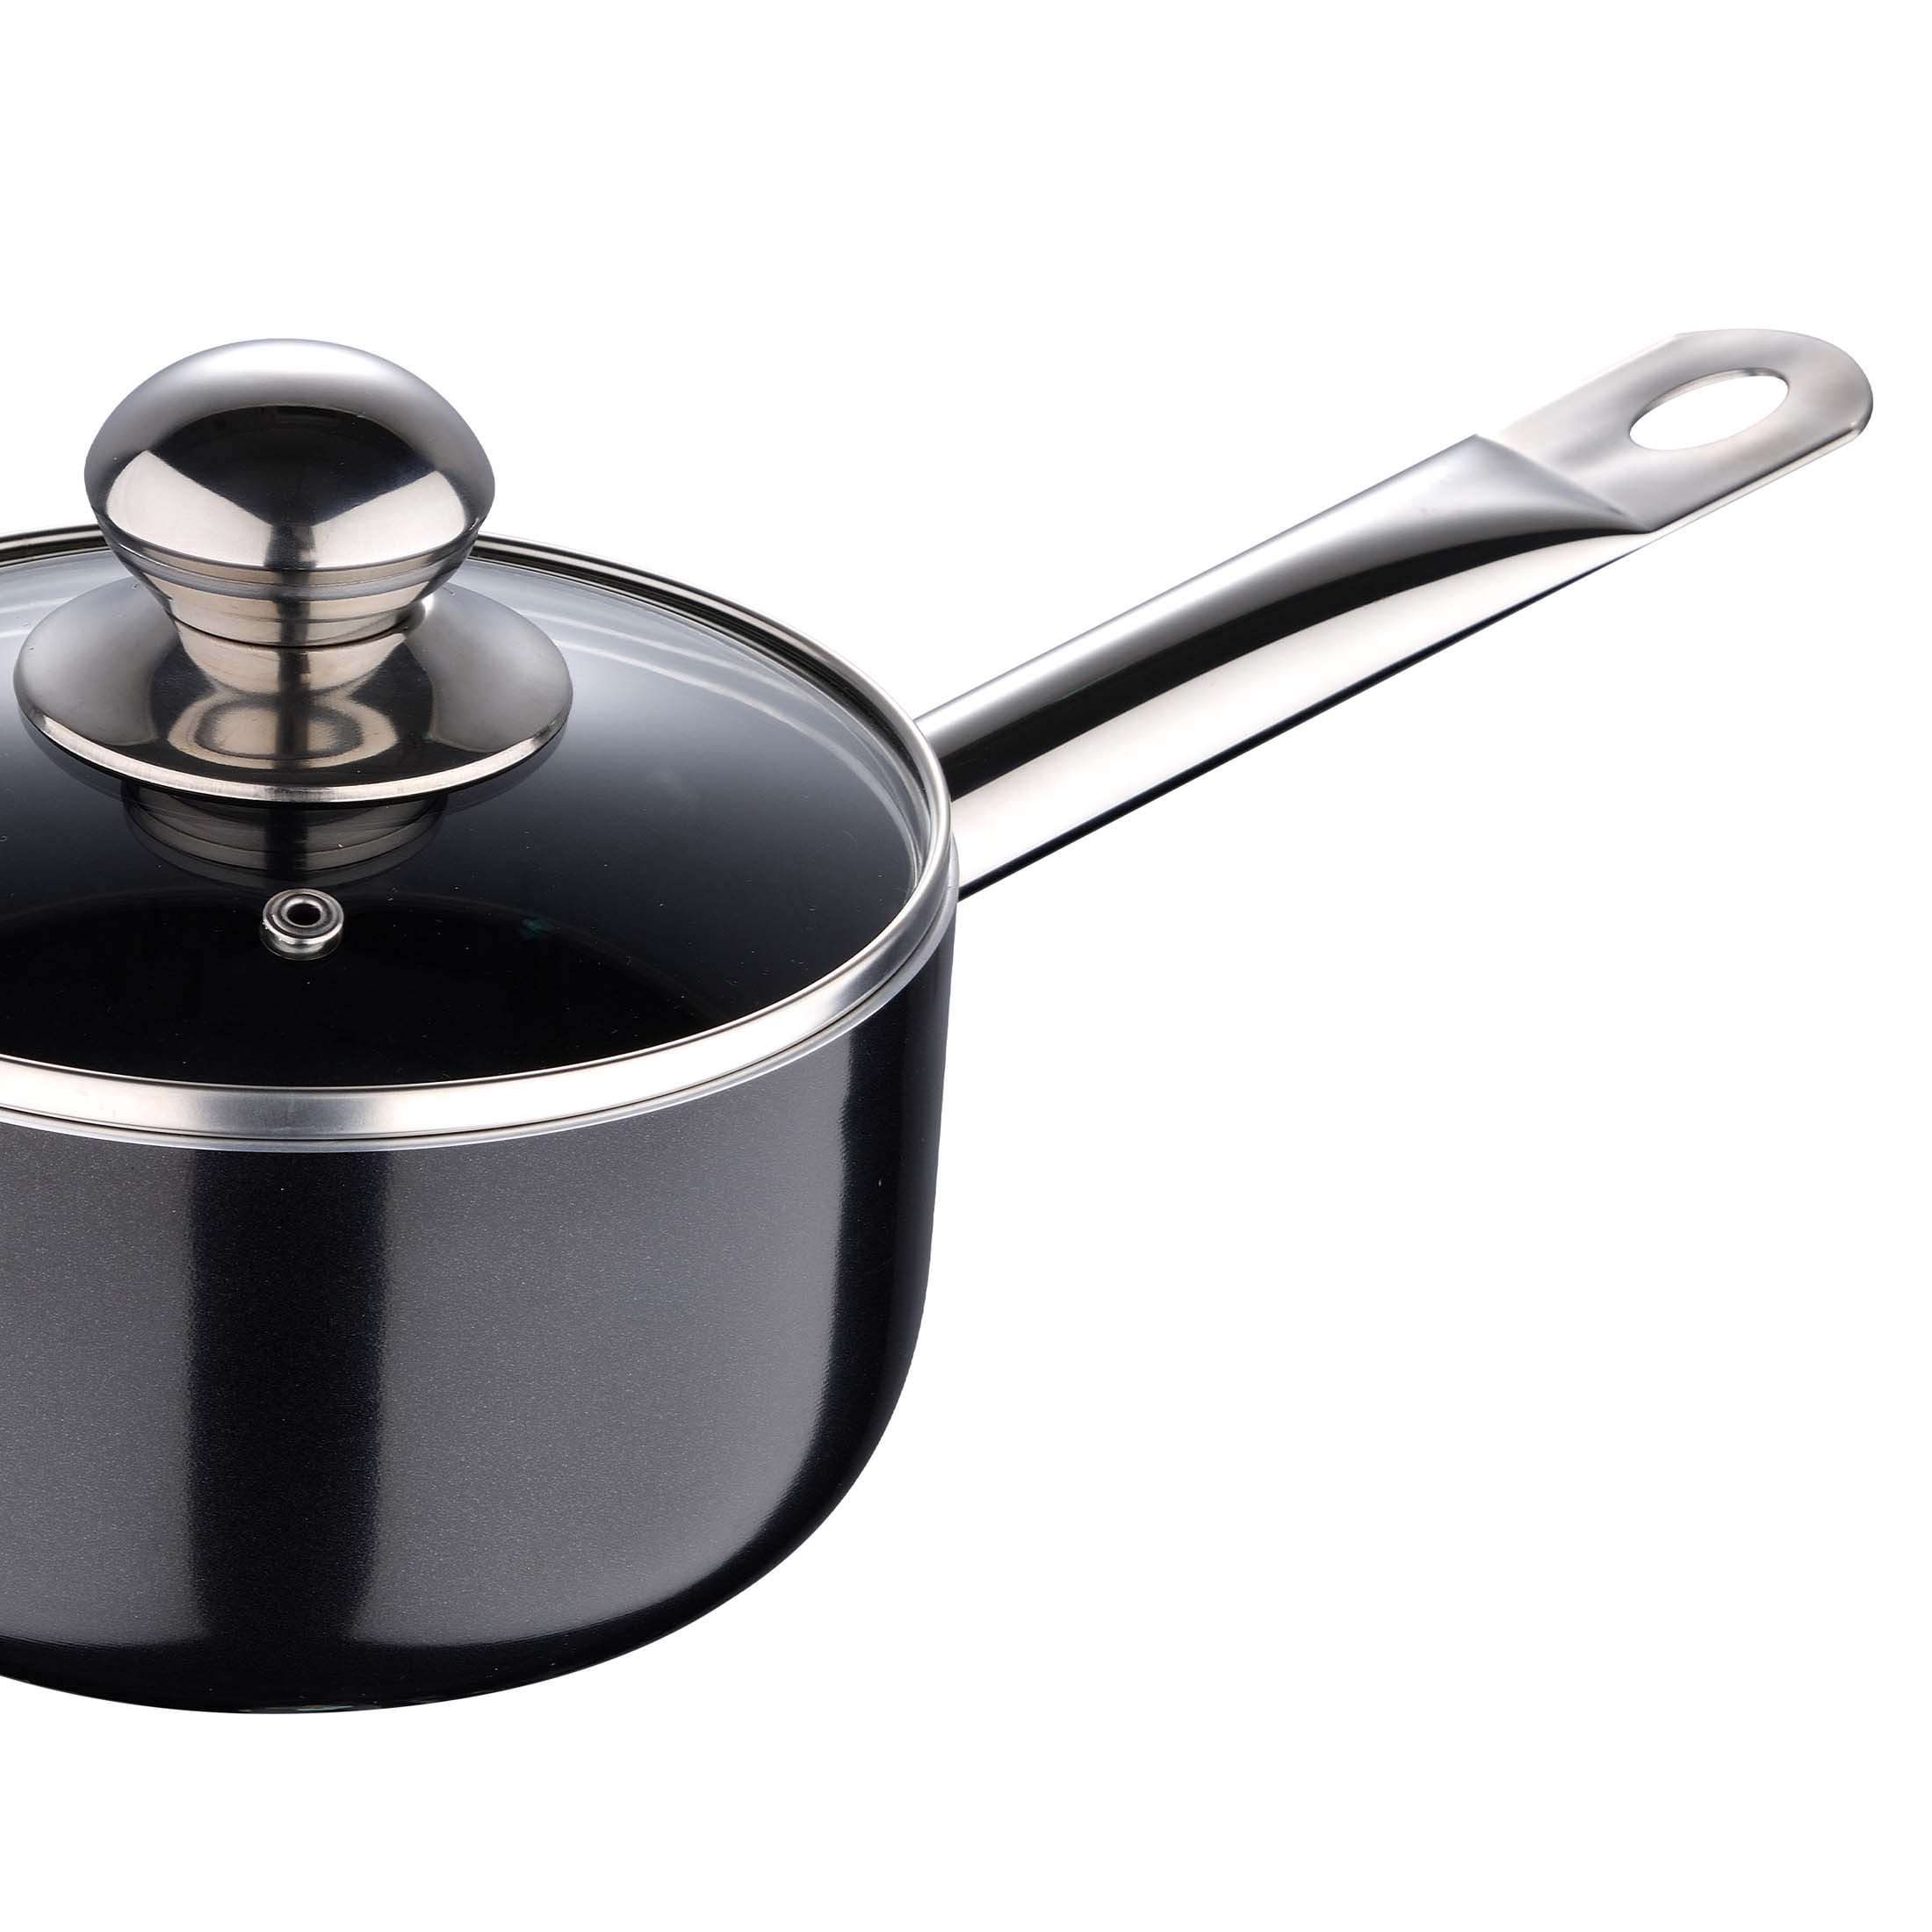 Bergner bergner - prochef cookware - pots and pans set nonstick